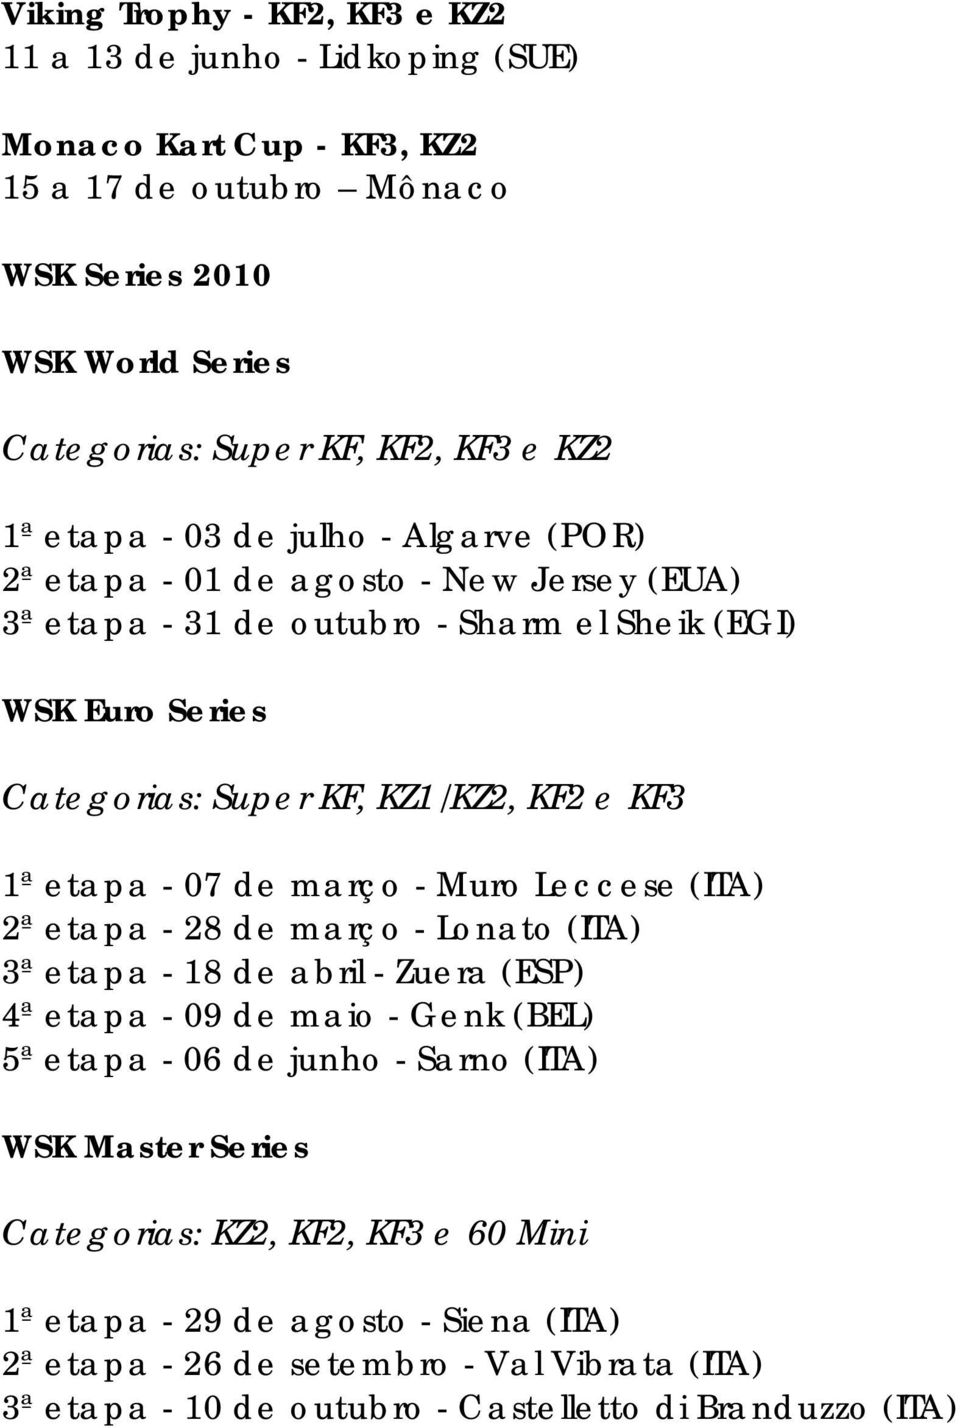 etapa - 07 de março - Muro Leccese (ITA) 2ª etapa - 28 de março - Lonato (ITA) 3ª etapa - 18 de abril - Zuera (ESP) 4ª etapa - 09 de maio - Genk (BEL) 5ª etapa - 06 de junho - Sarno (ITA)